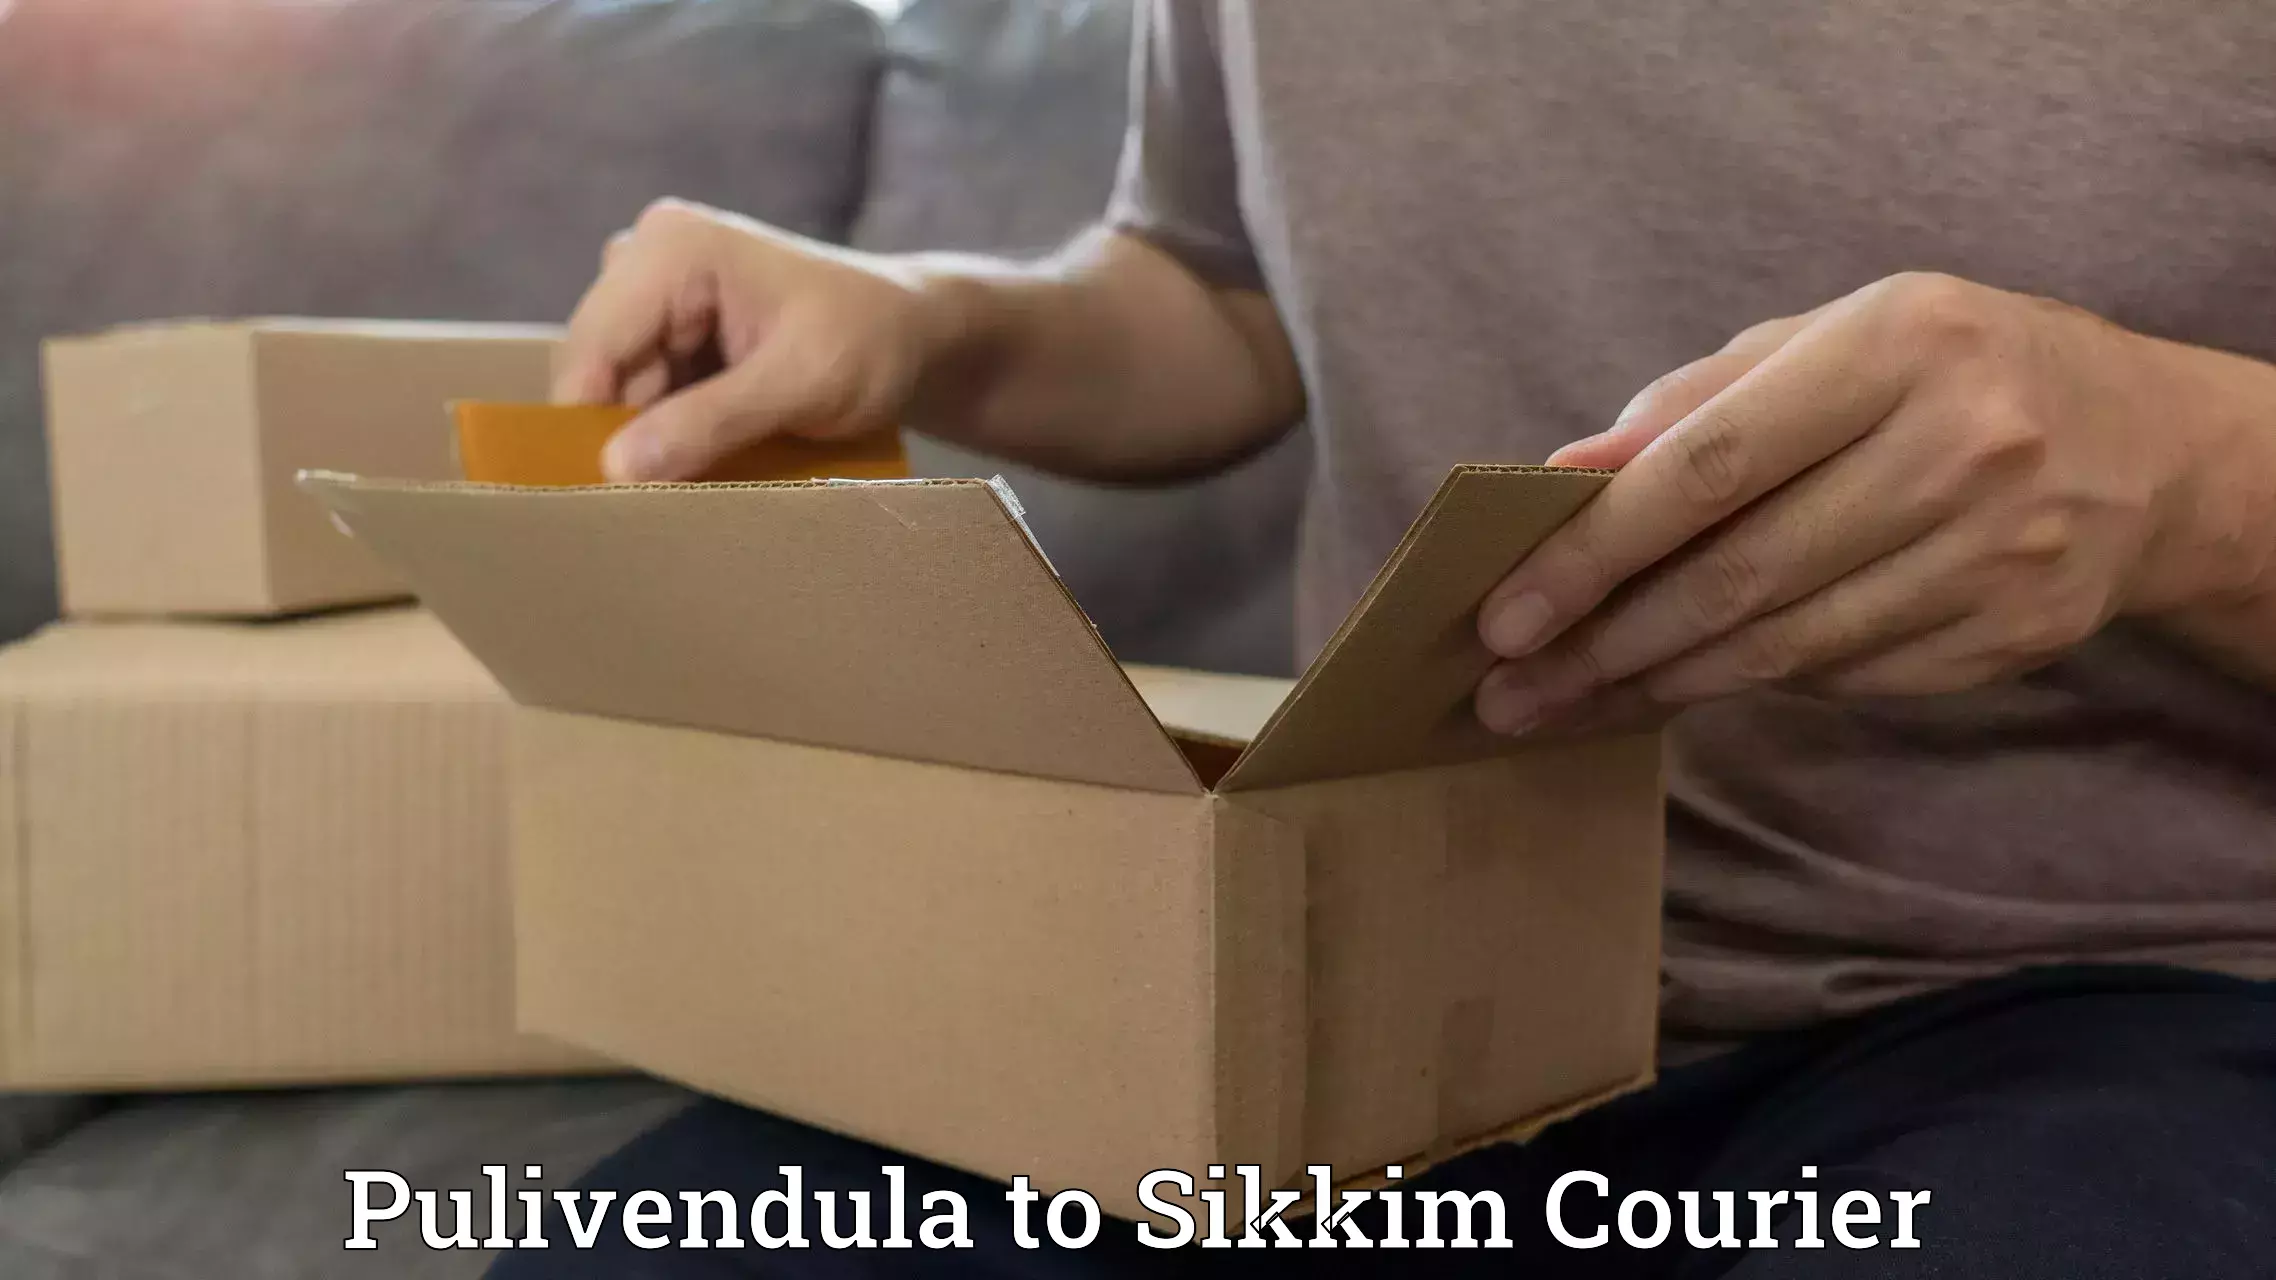 Efficient parcel service Pulivendula to South Sikkim